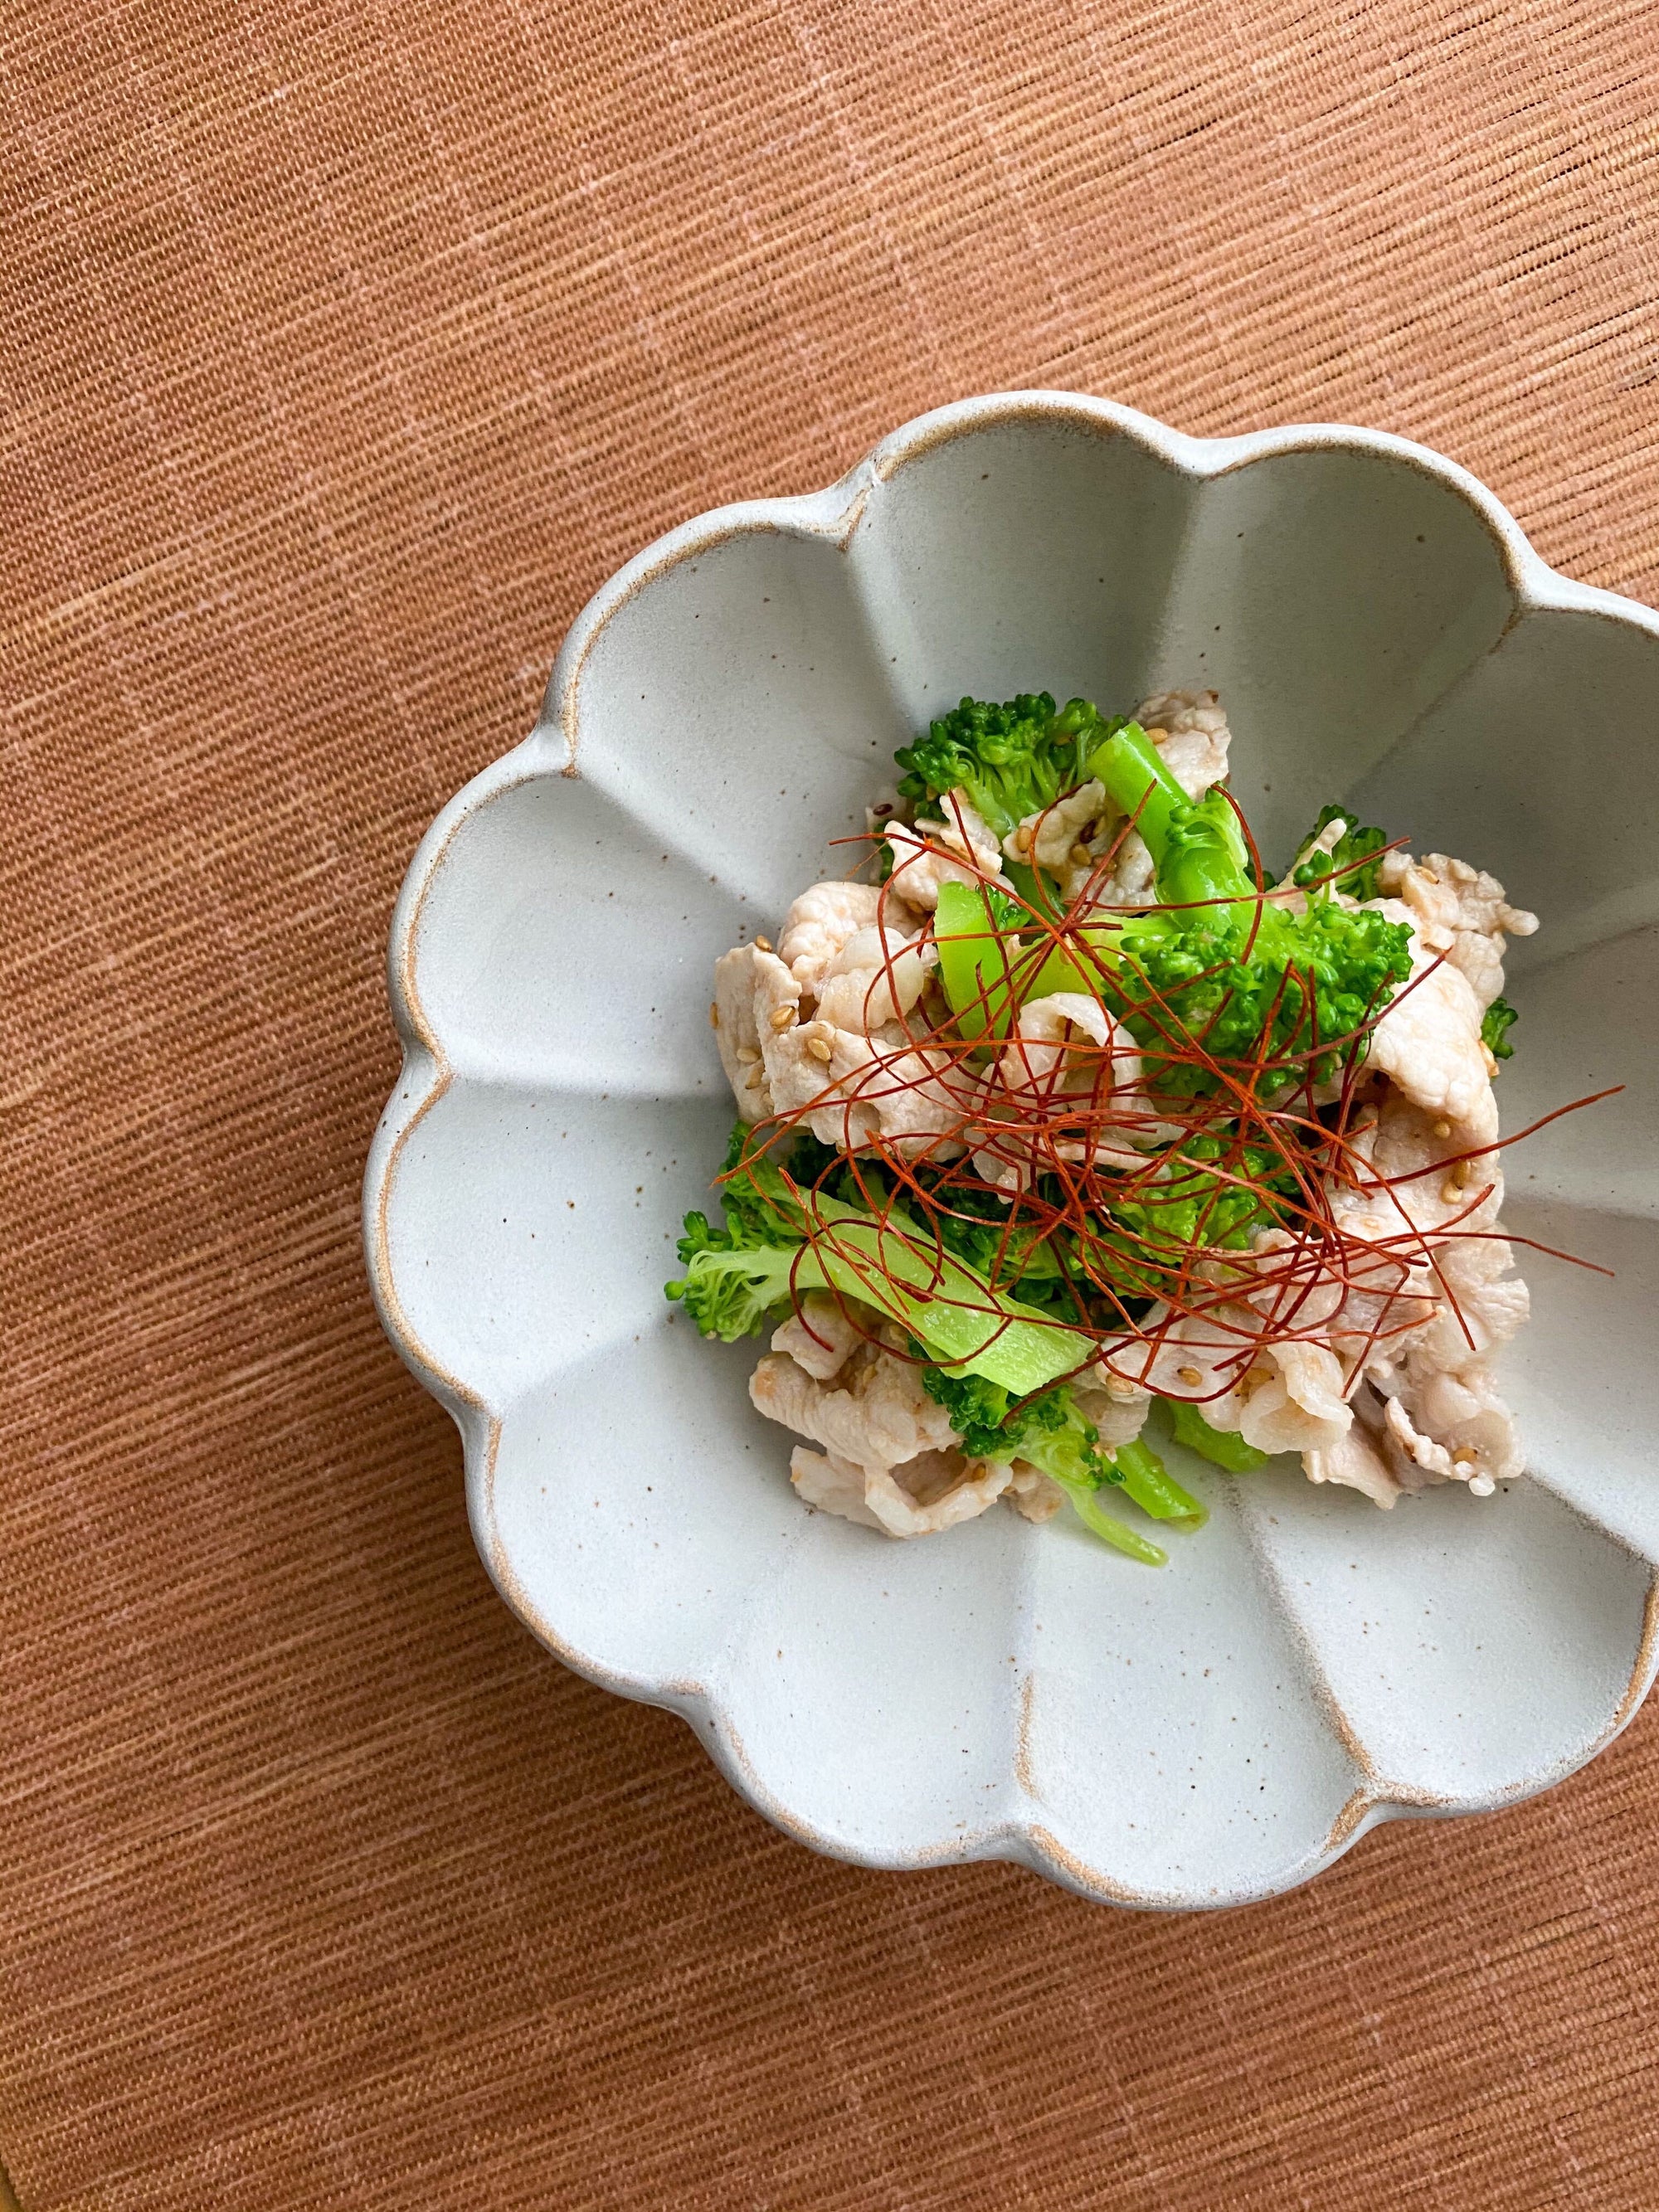 RECIPE: Boiled Pork and Broccoli Marinated with Umeboshi